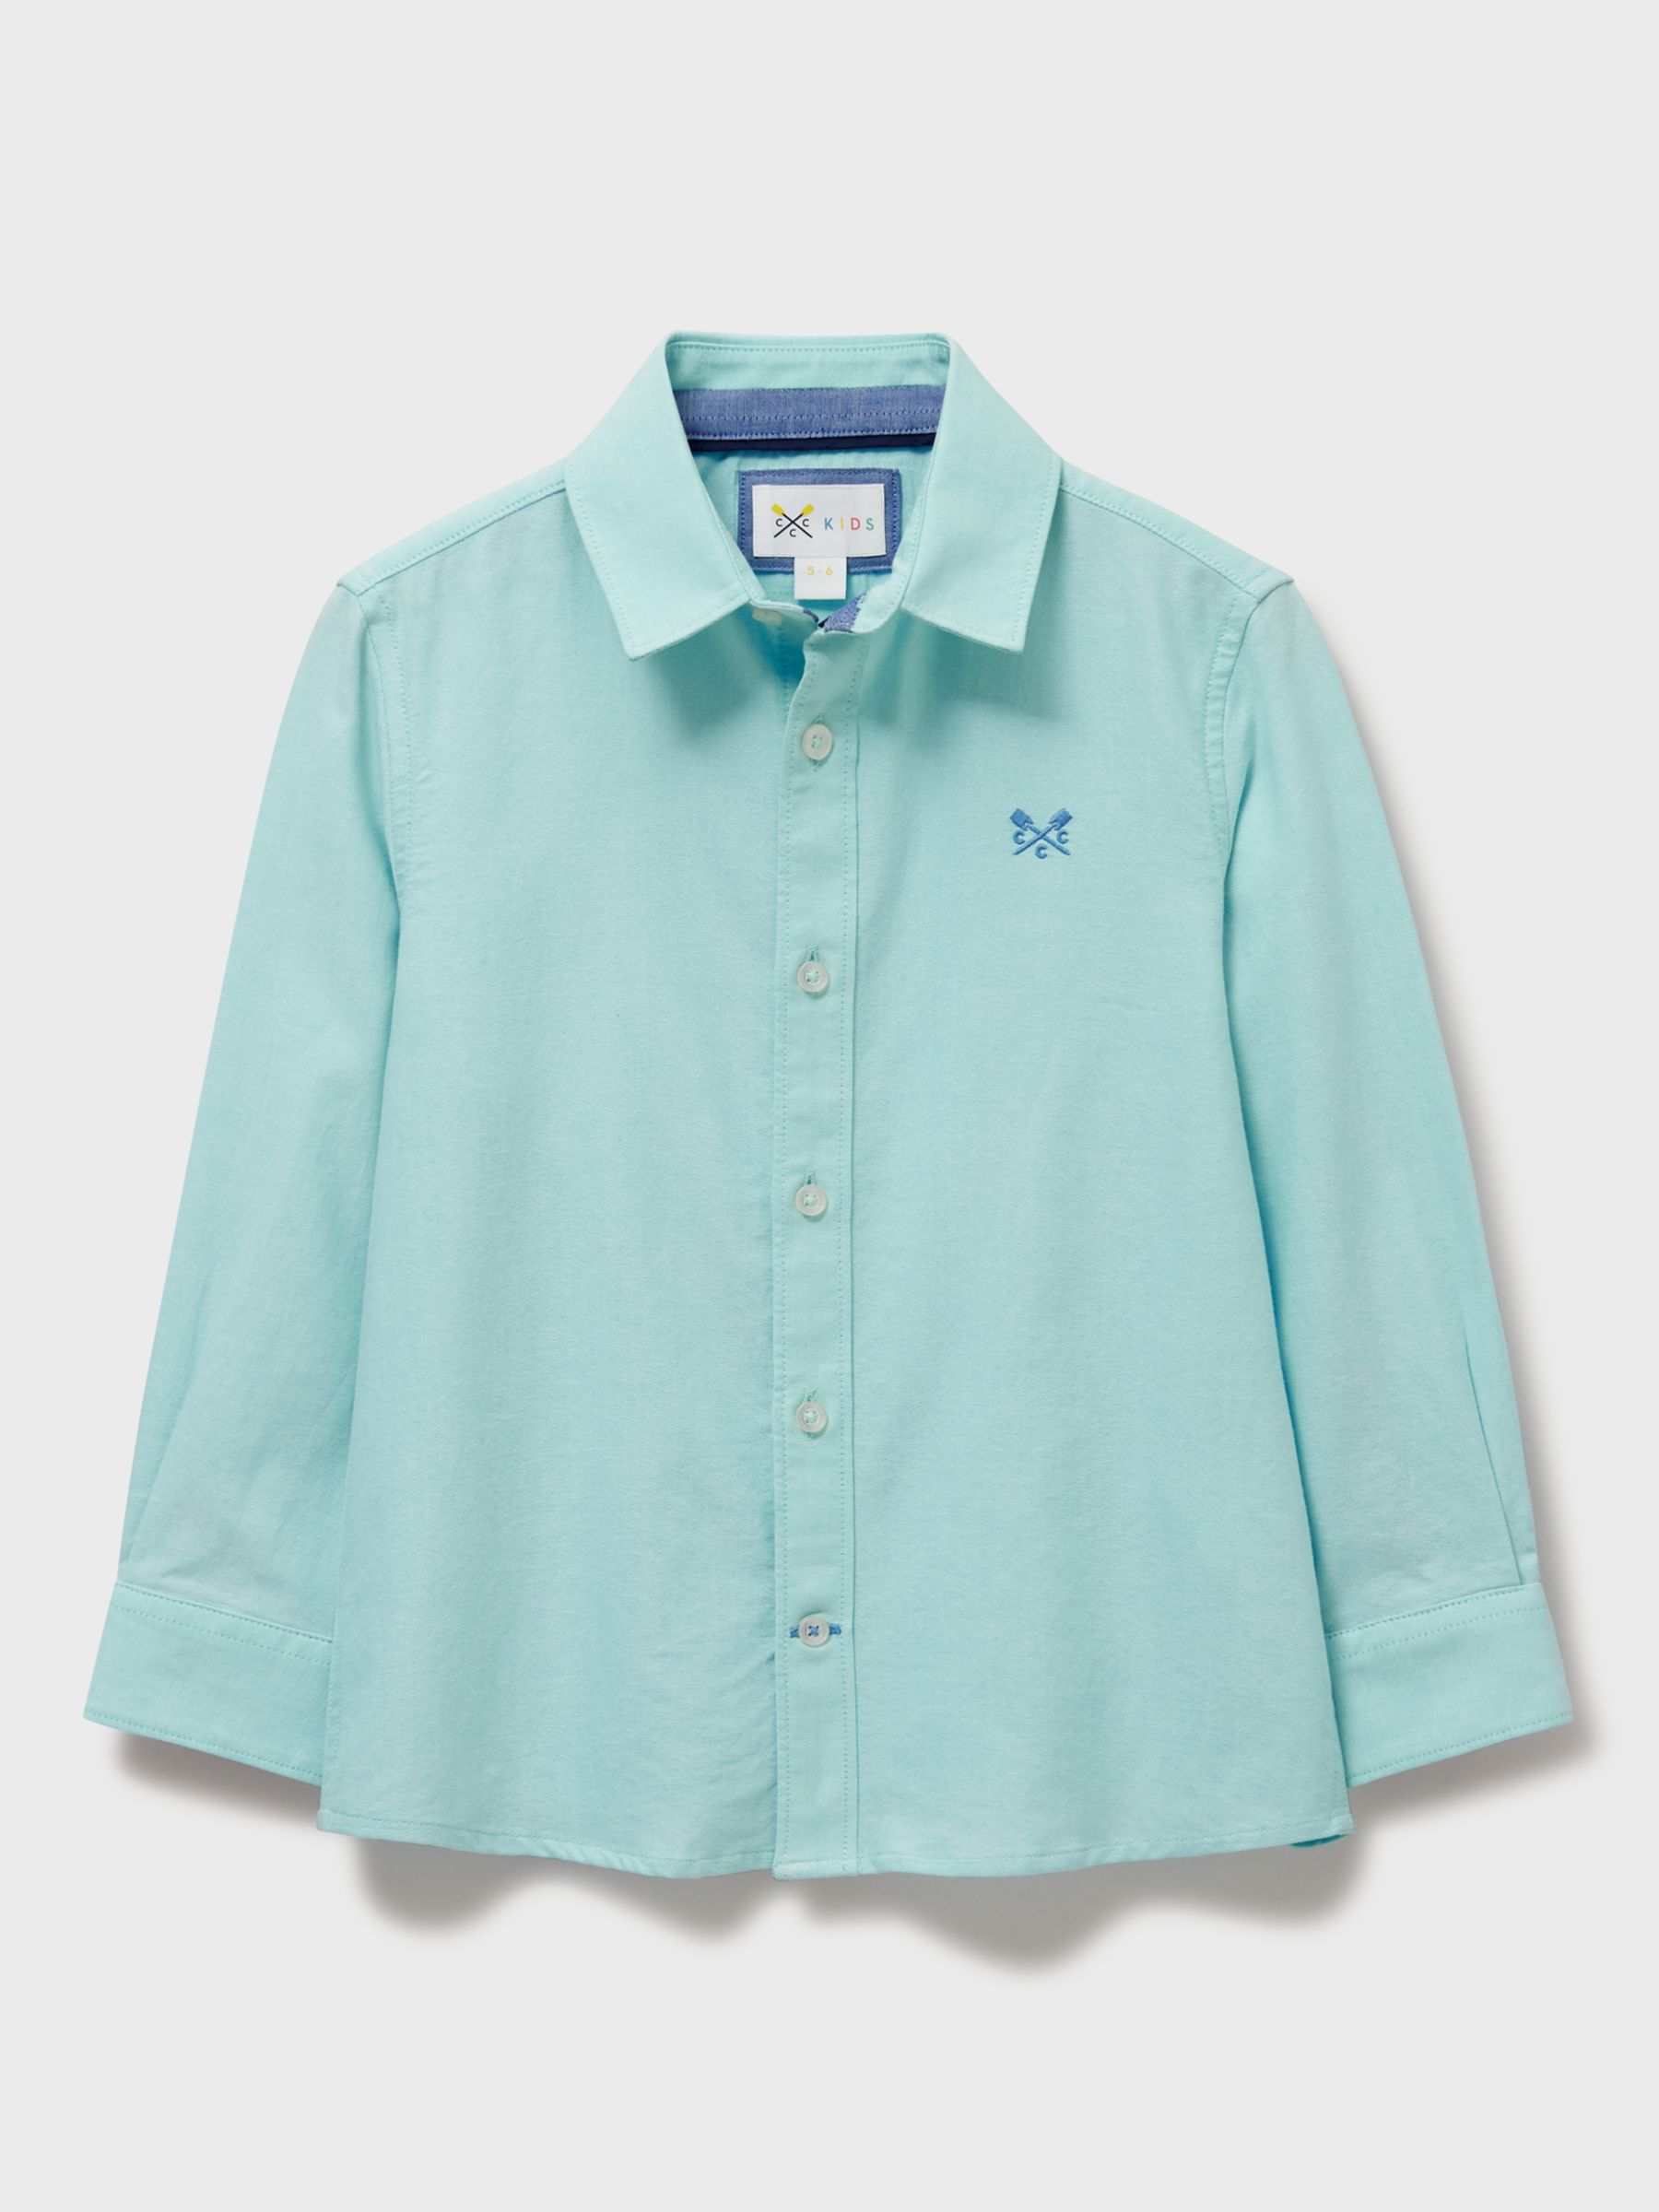 Crew Clothing Kids' Oxford Long Sleeve Shirt, Mint Green, 3-4 years